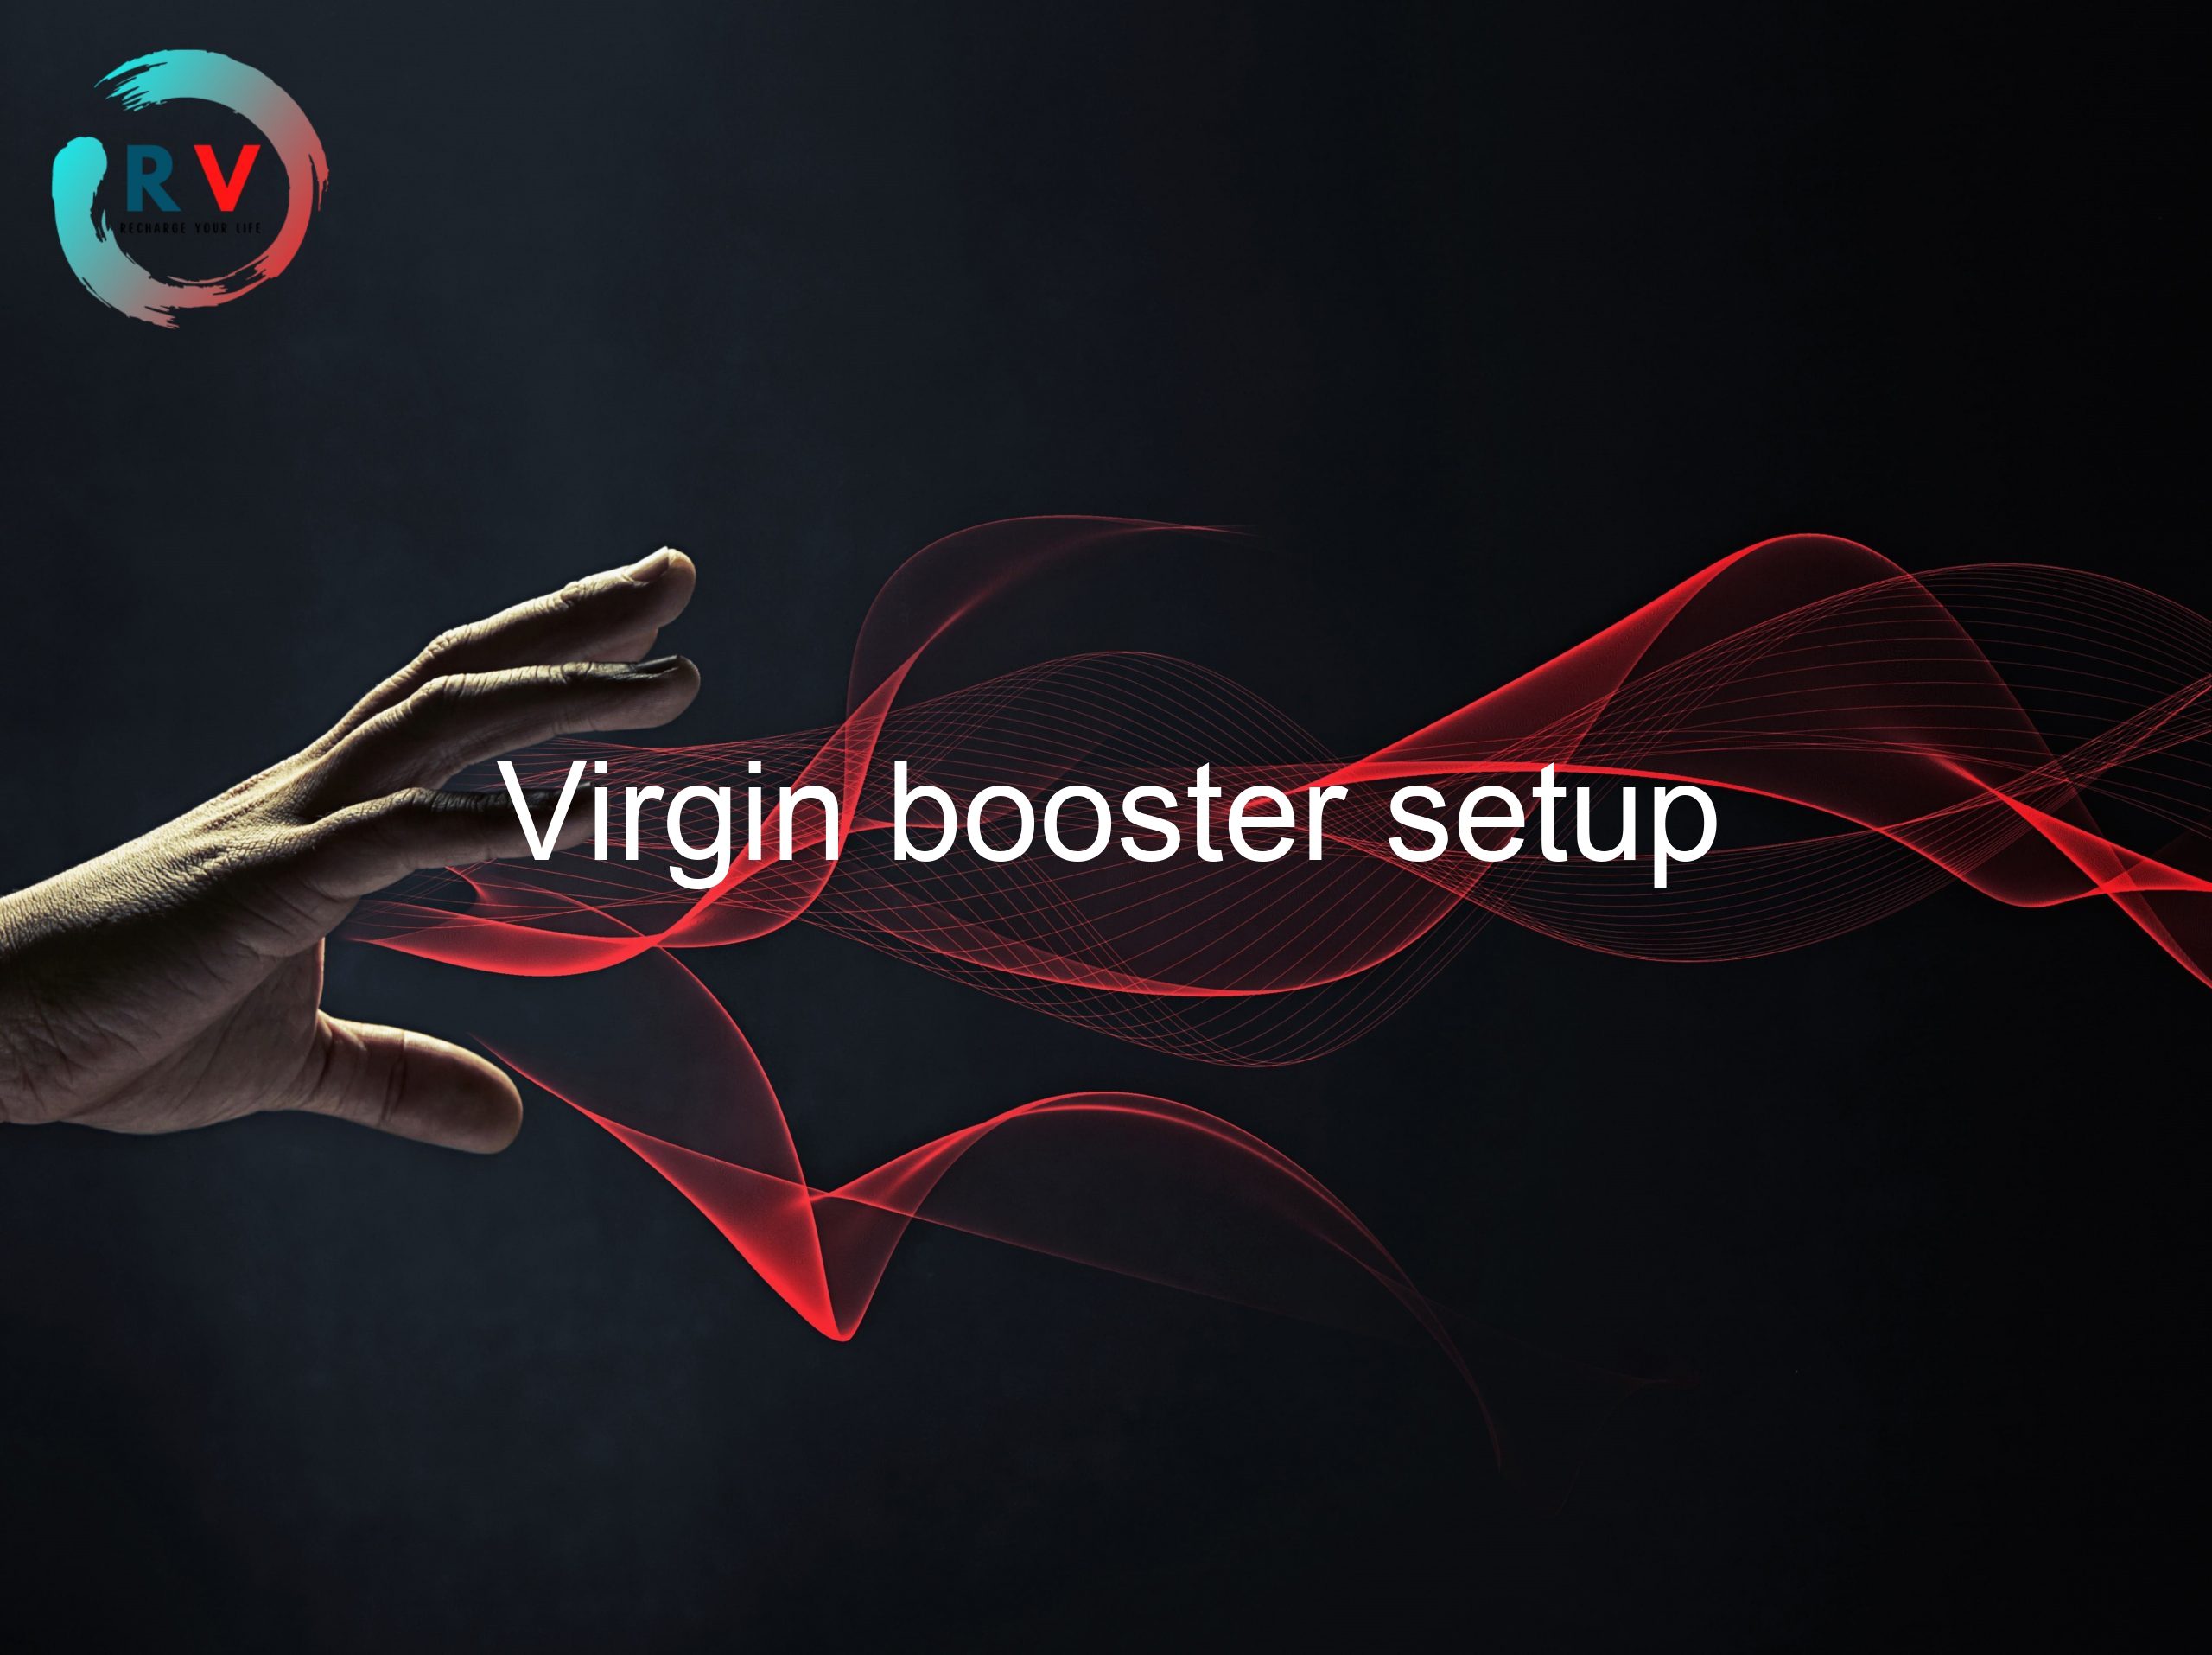 Virgin booster setup